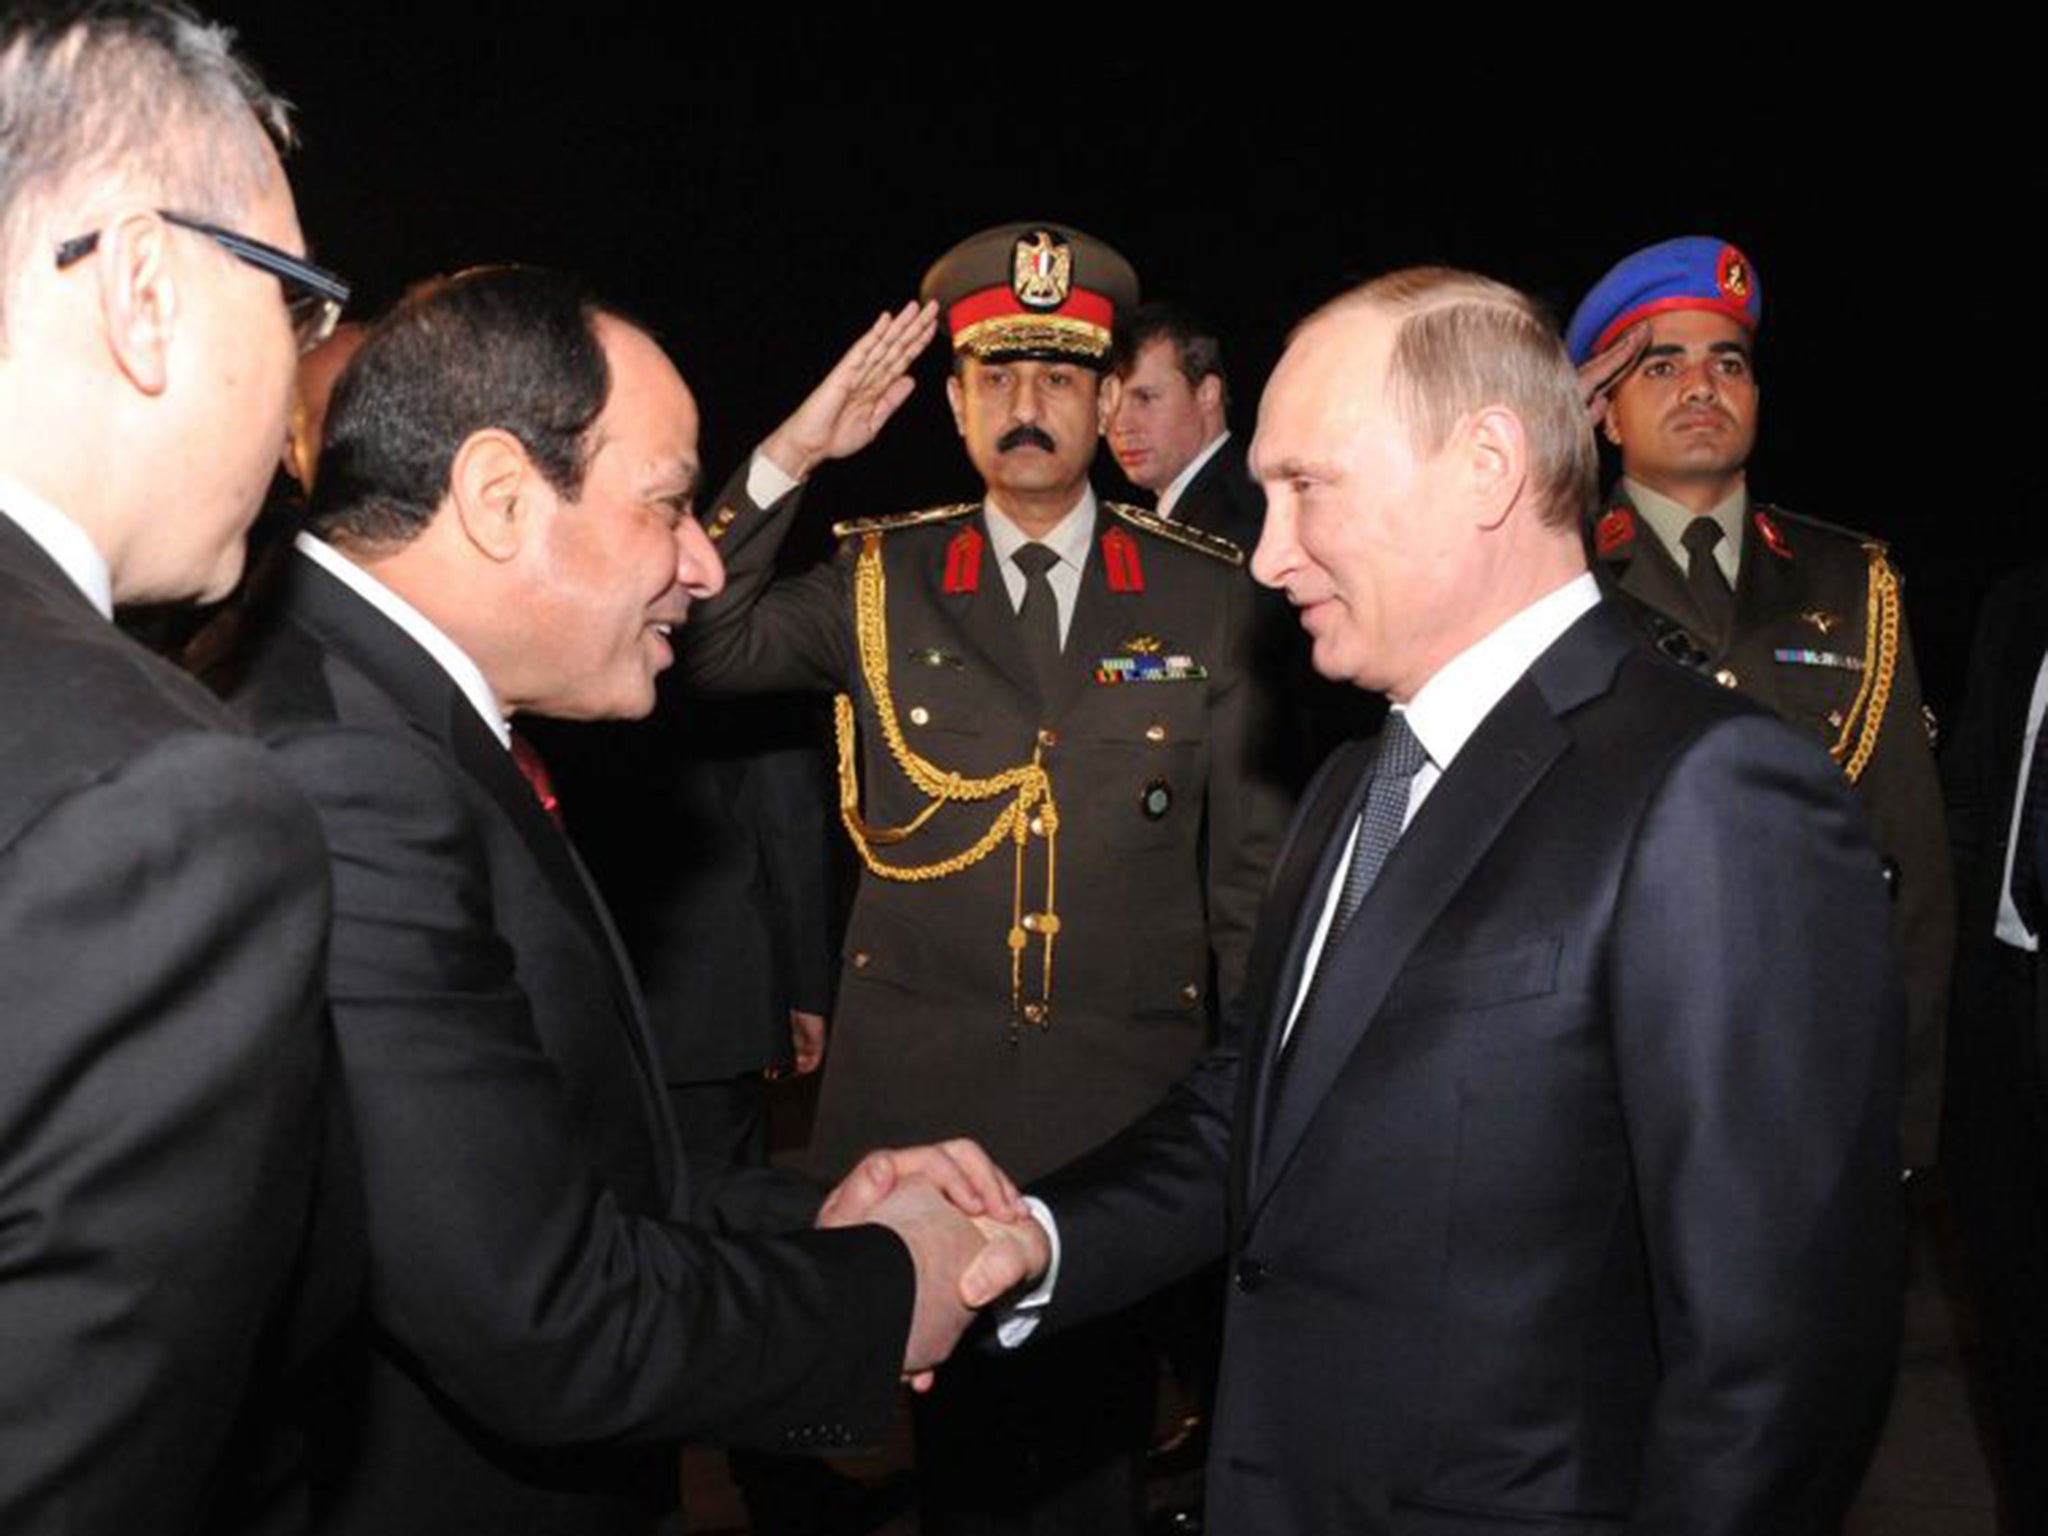 President Sisi welcomes Vladimir Putin to Cairo on Monday night 